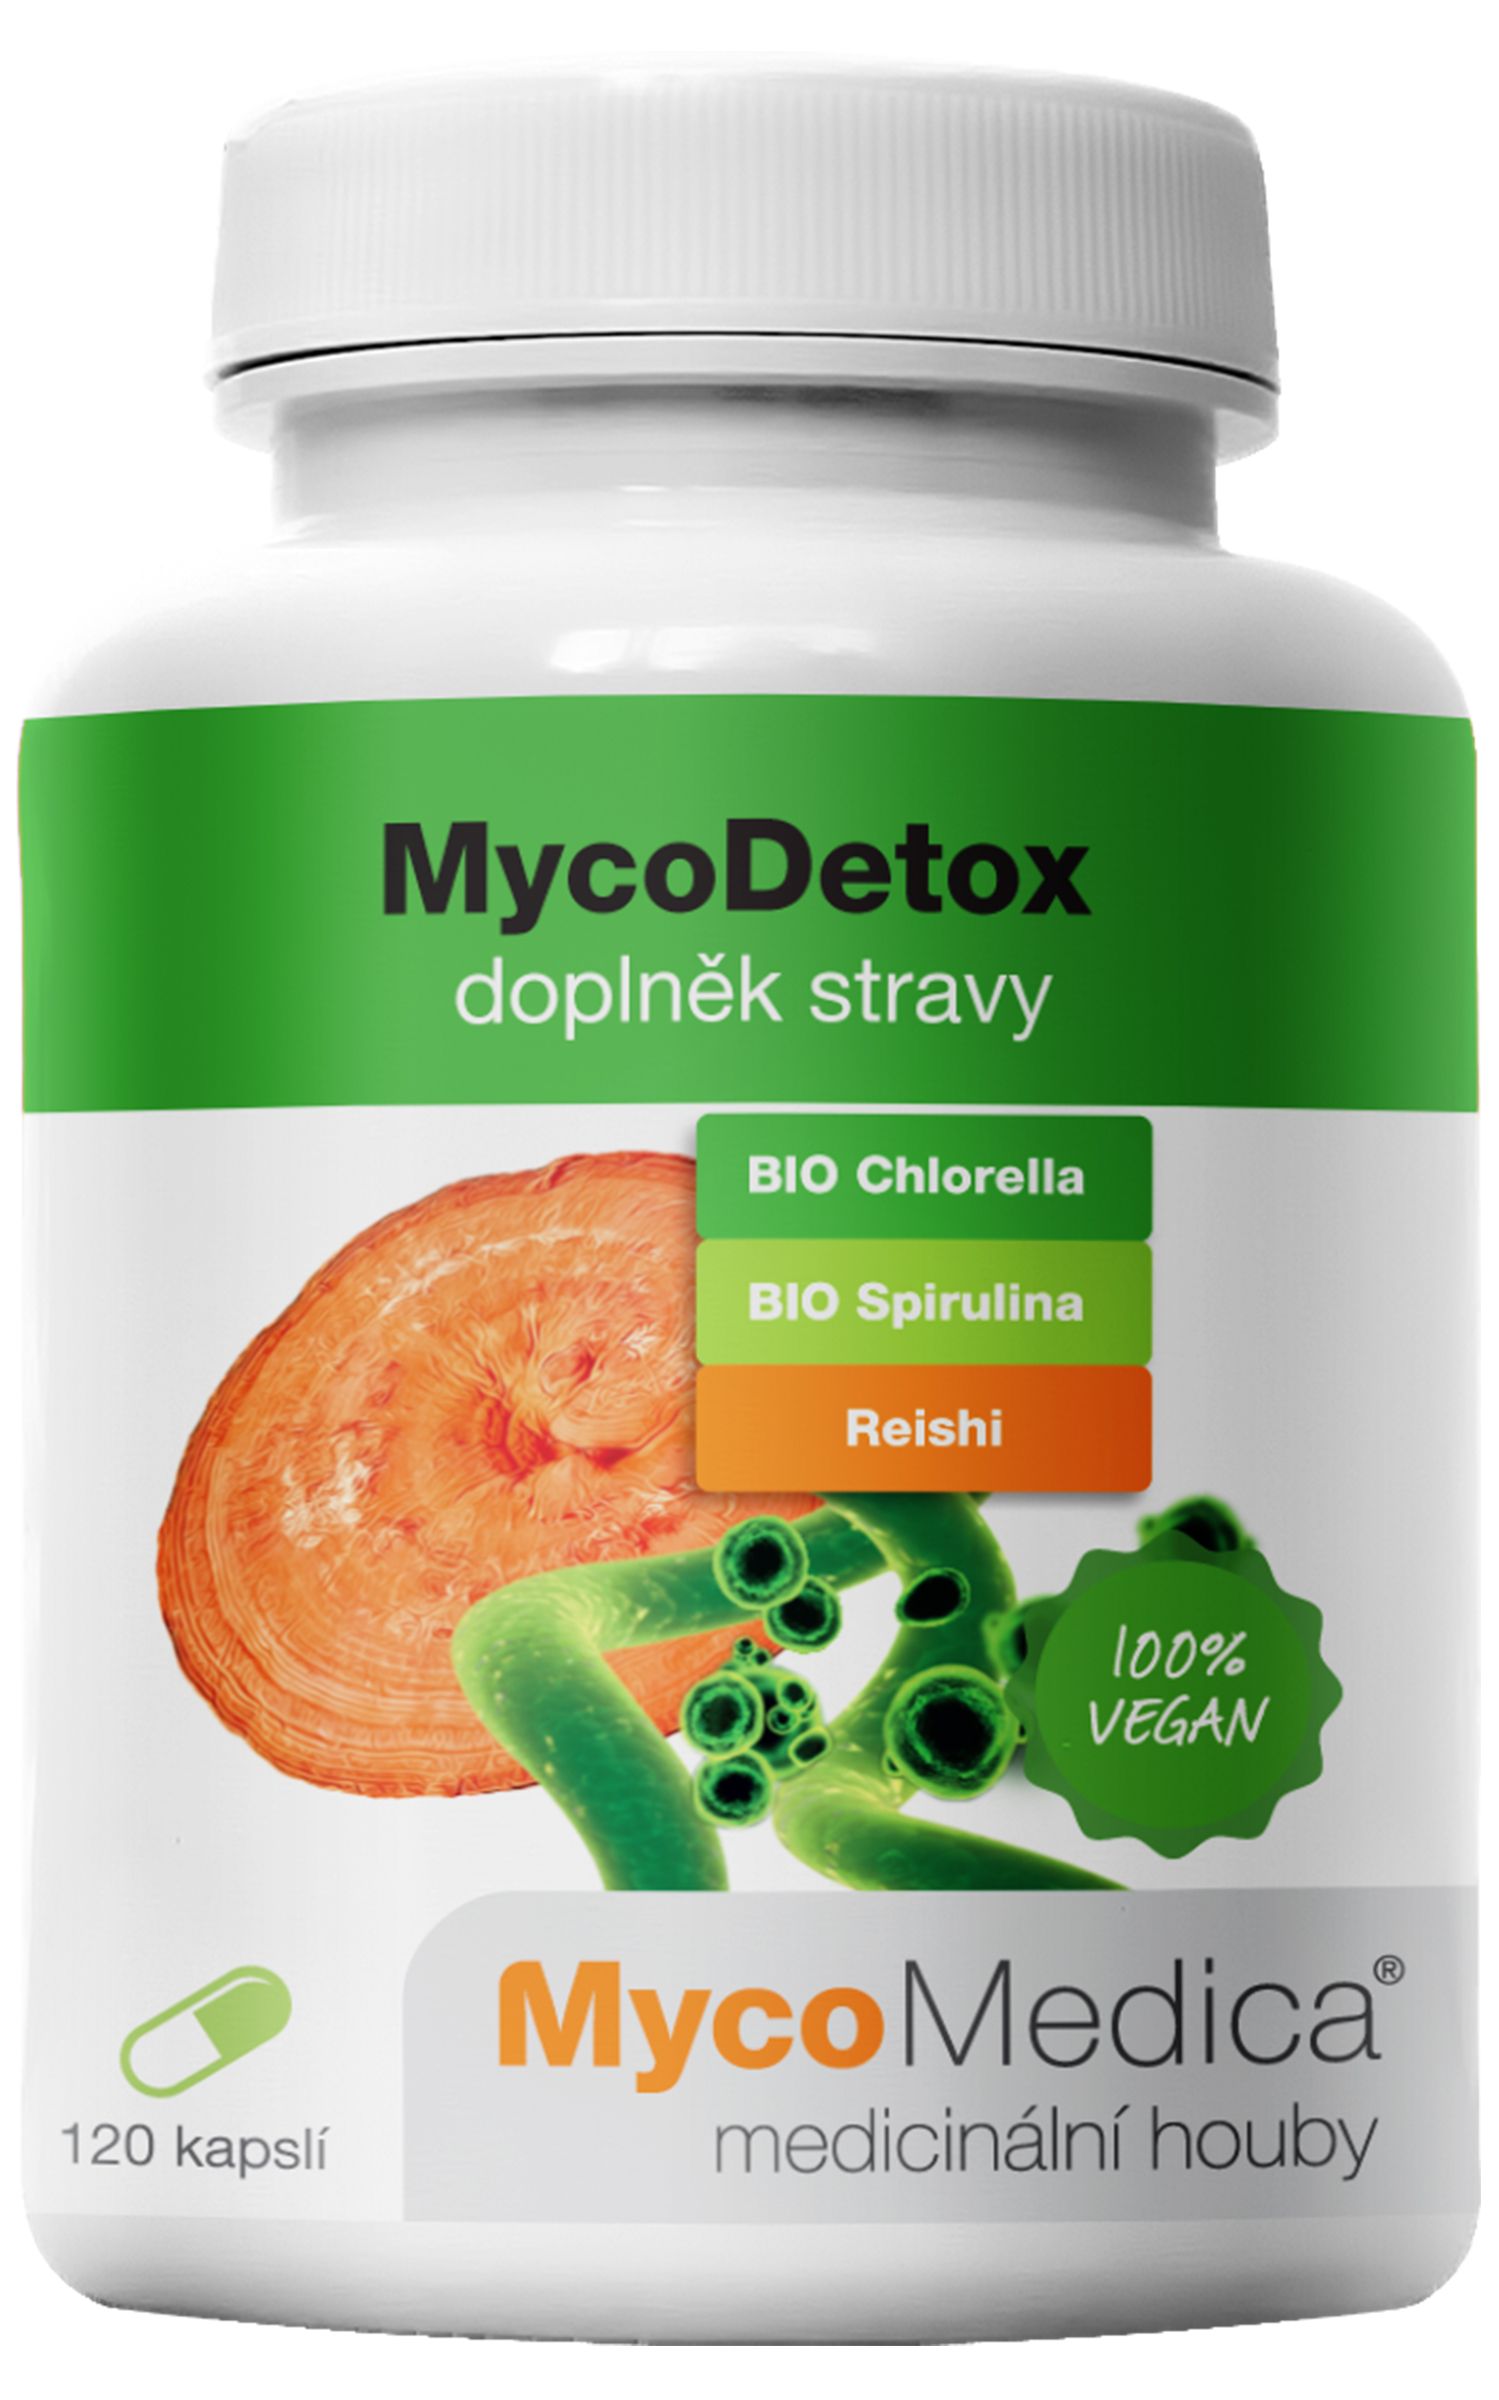 Mycomedica Mycodetox Vegan 420mg 120cps